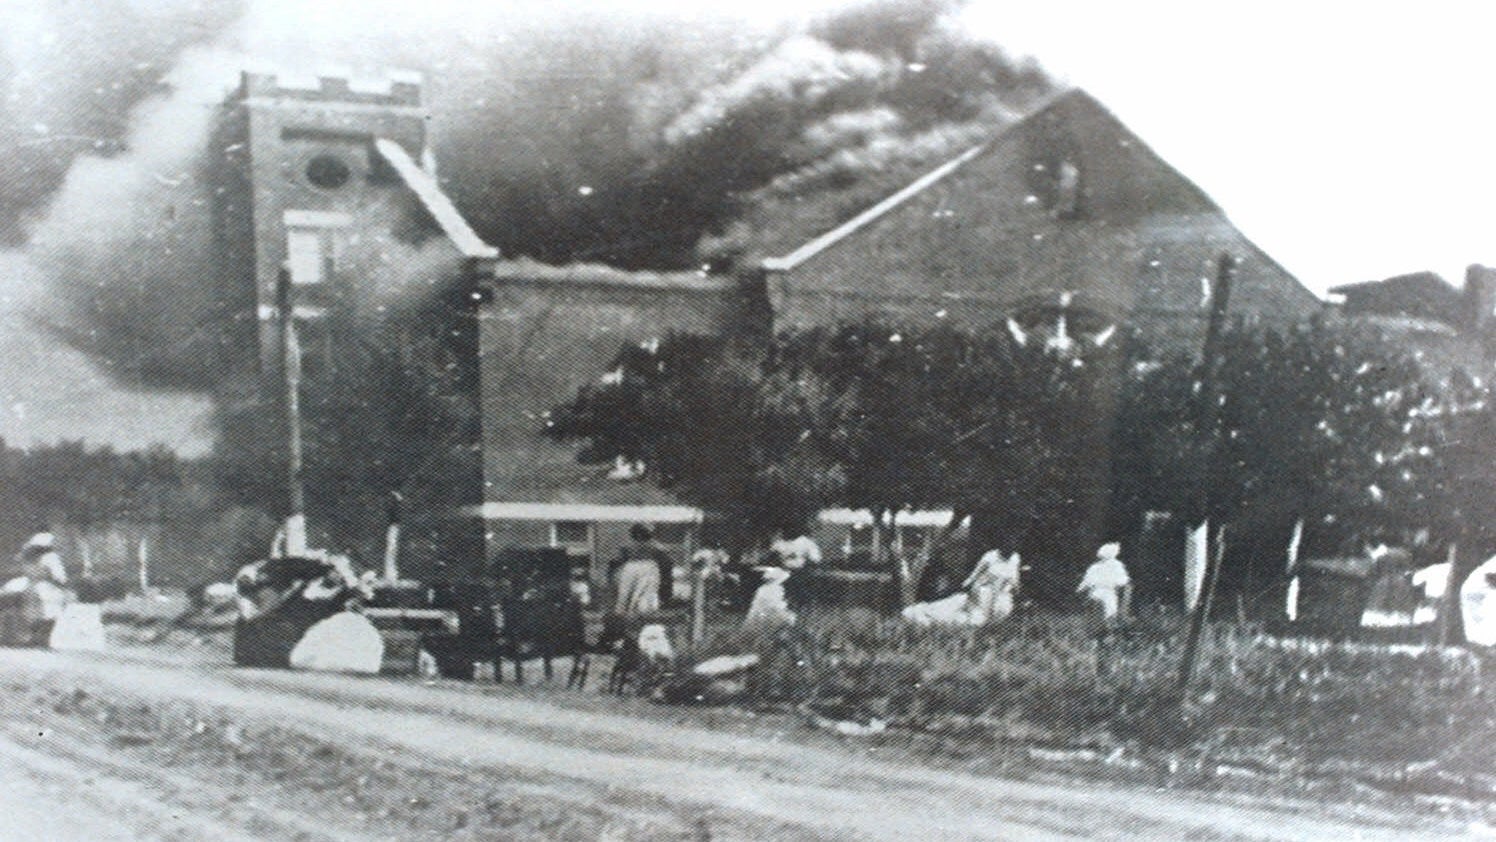 tulsa race riots of 1921